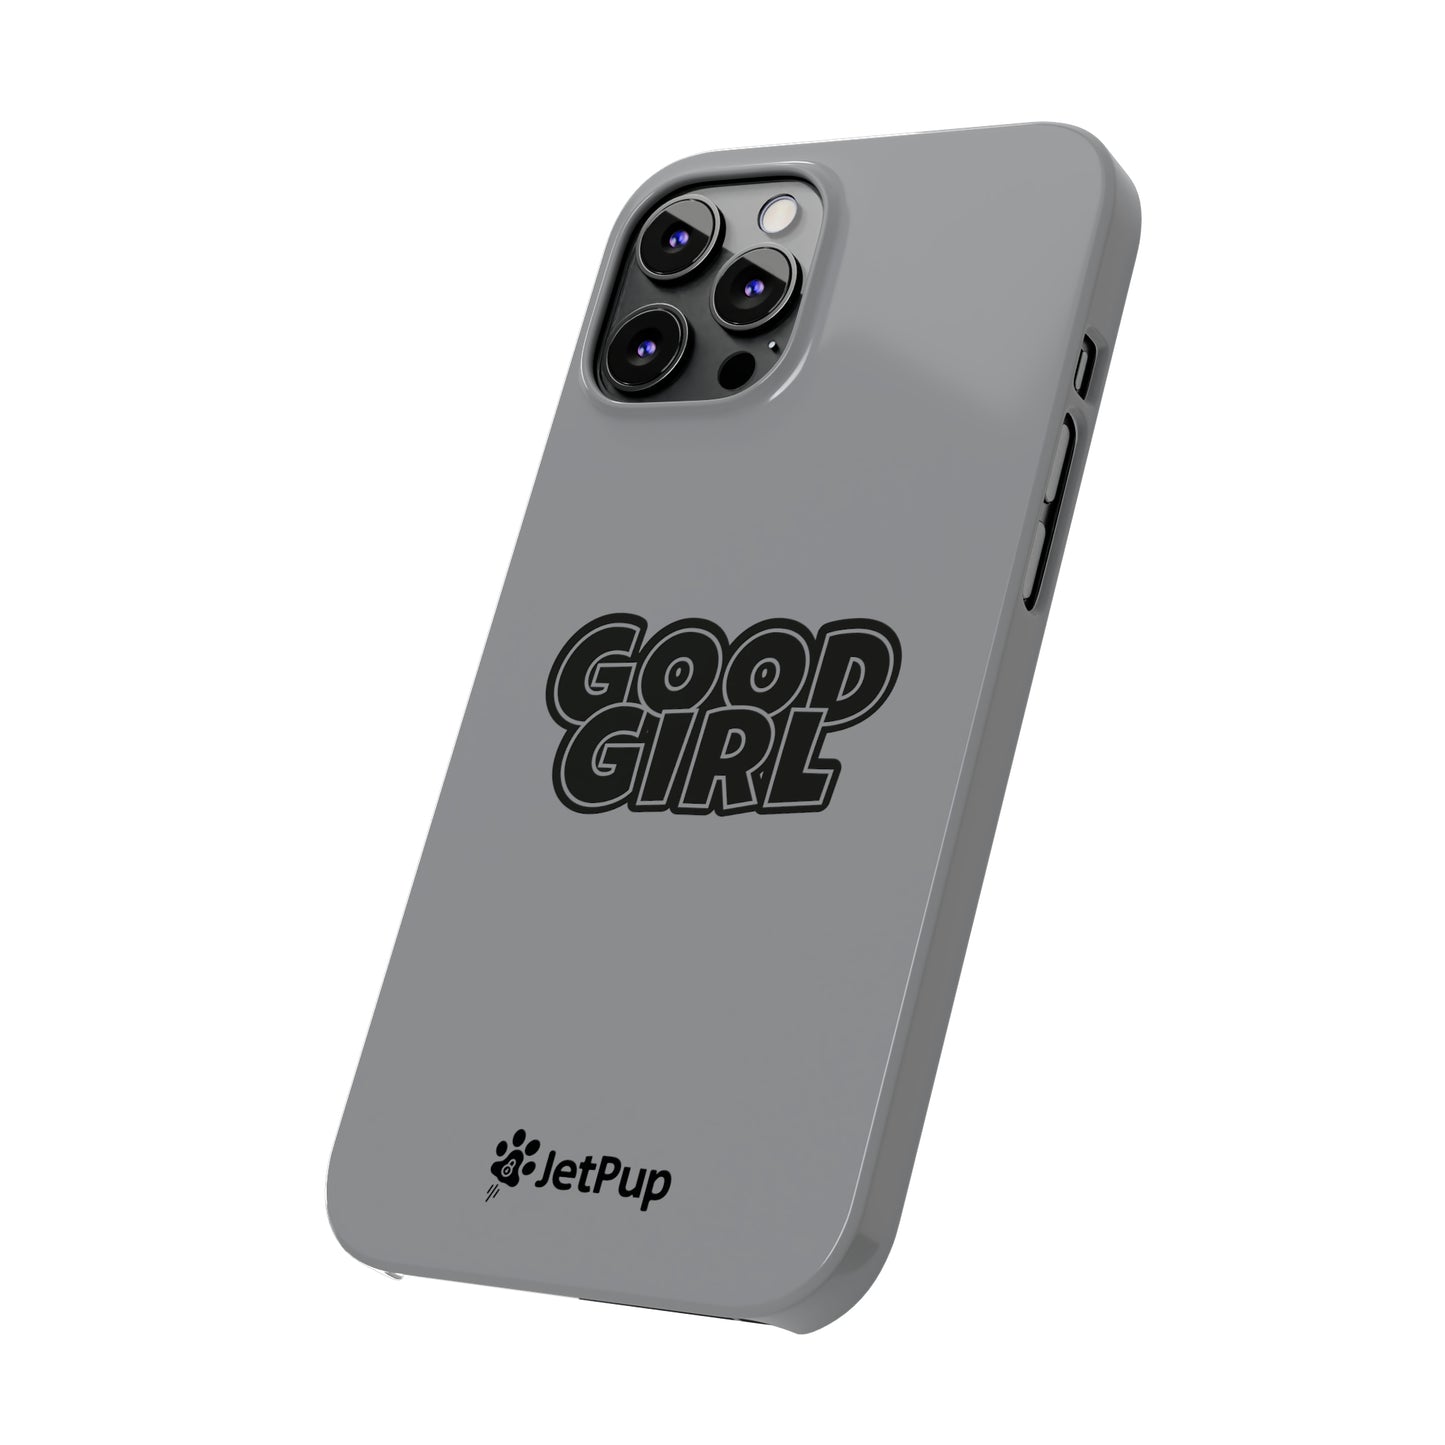 Good Girl Slim iPhone Cases - Grey